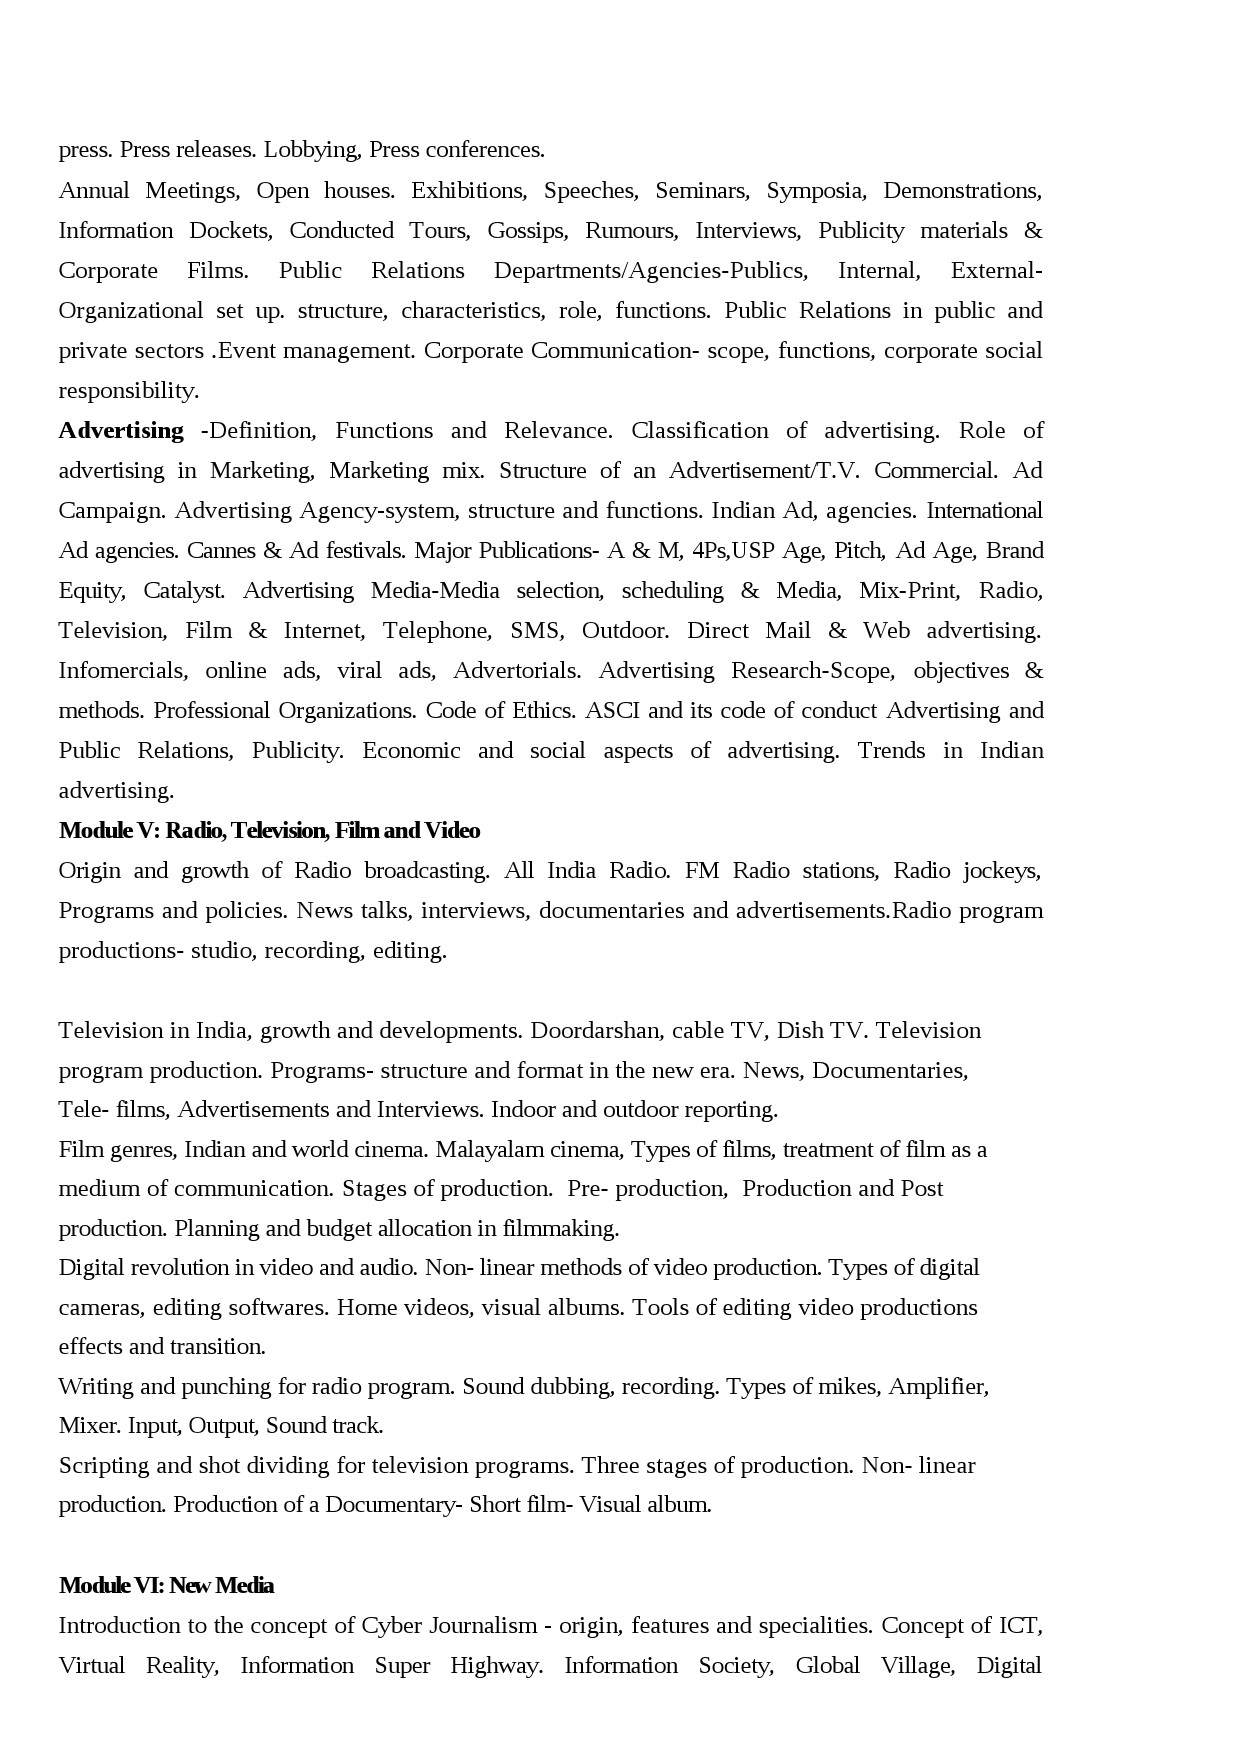 Humanities Syllabus for Kerala PSC 2021 Exam - Notification Image 22